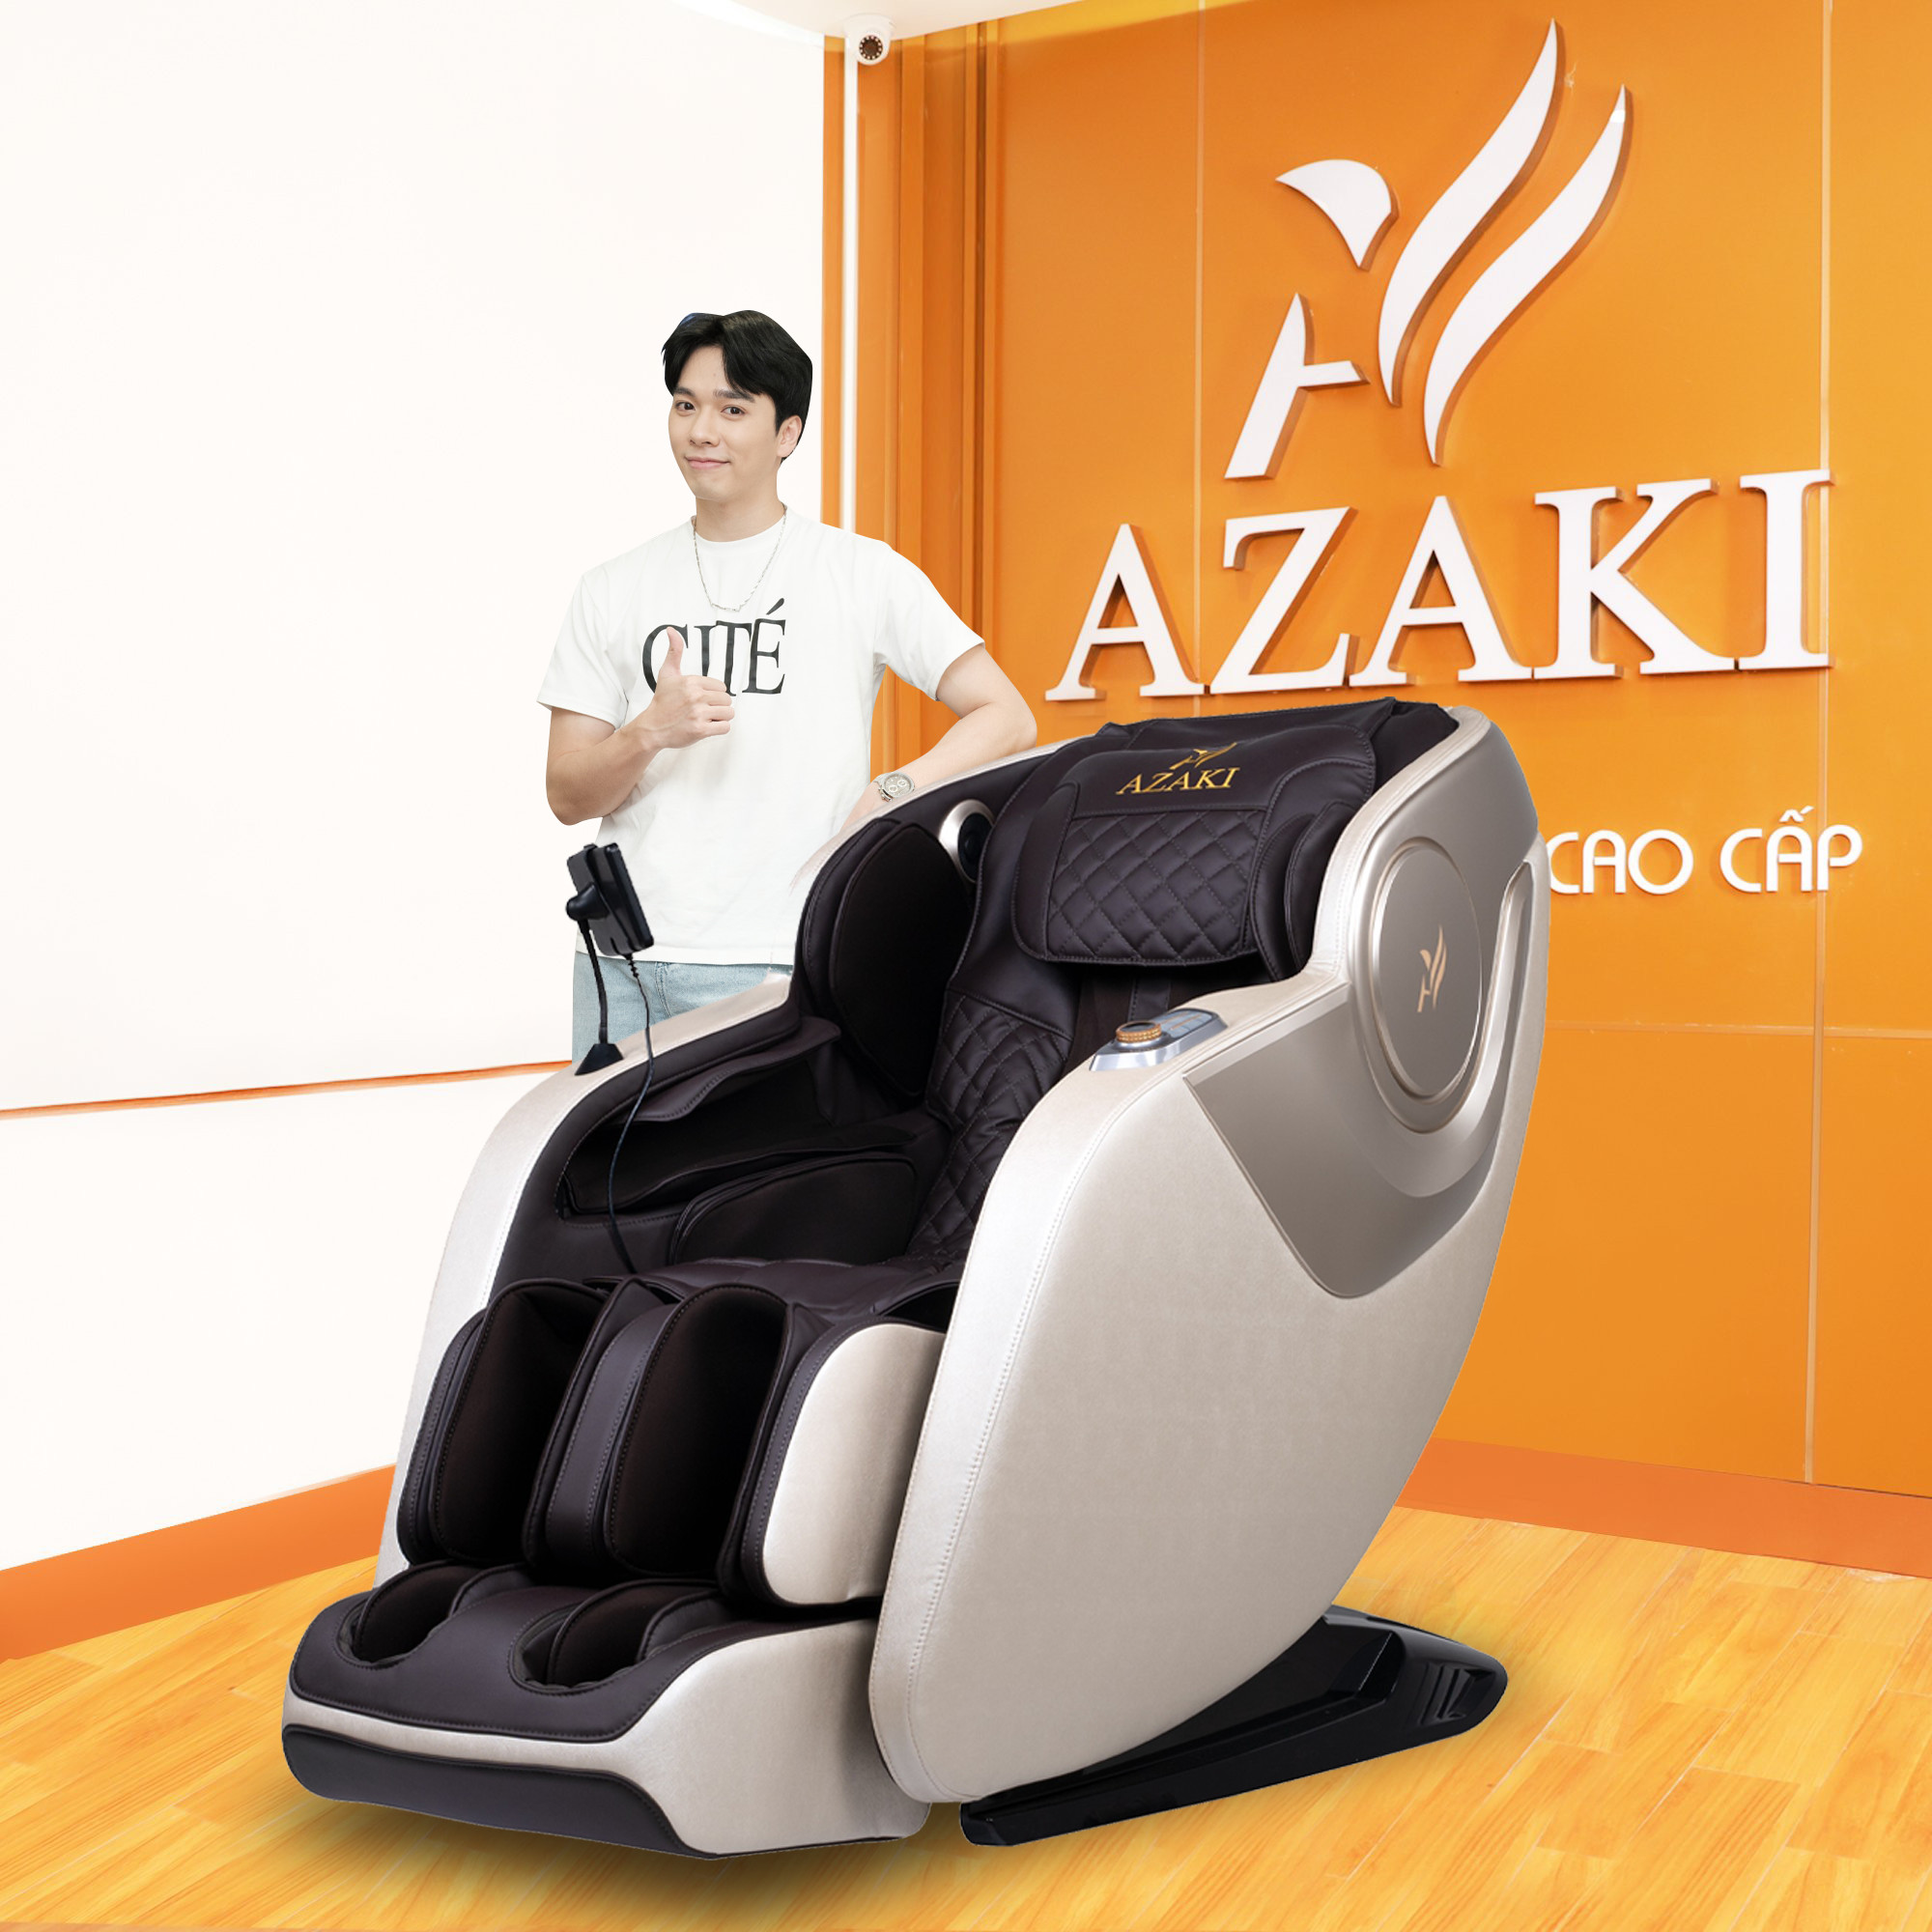 Ghế Massage AZAKI V680 - Trắng Nâu